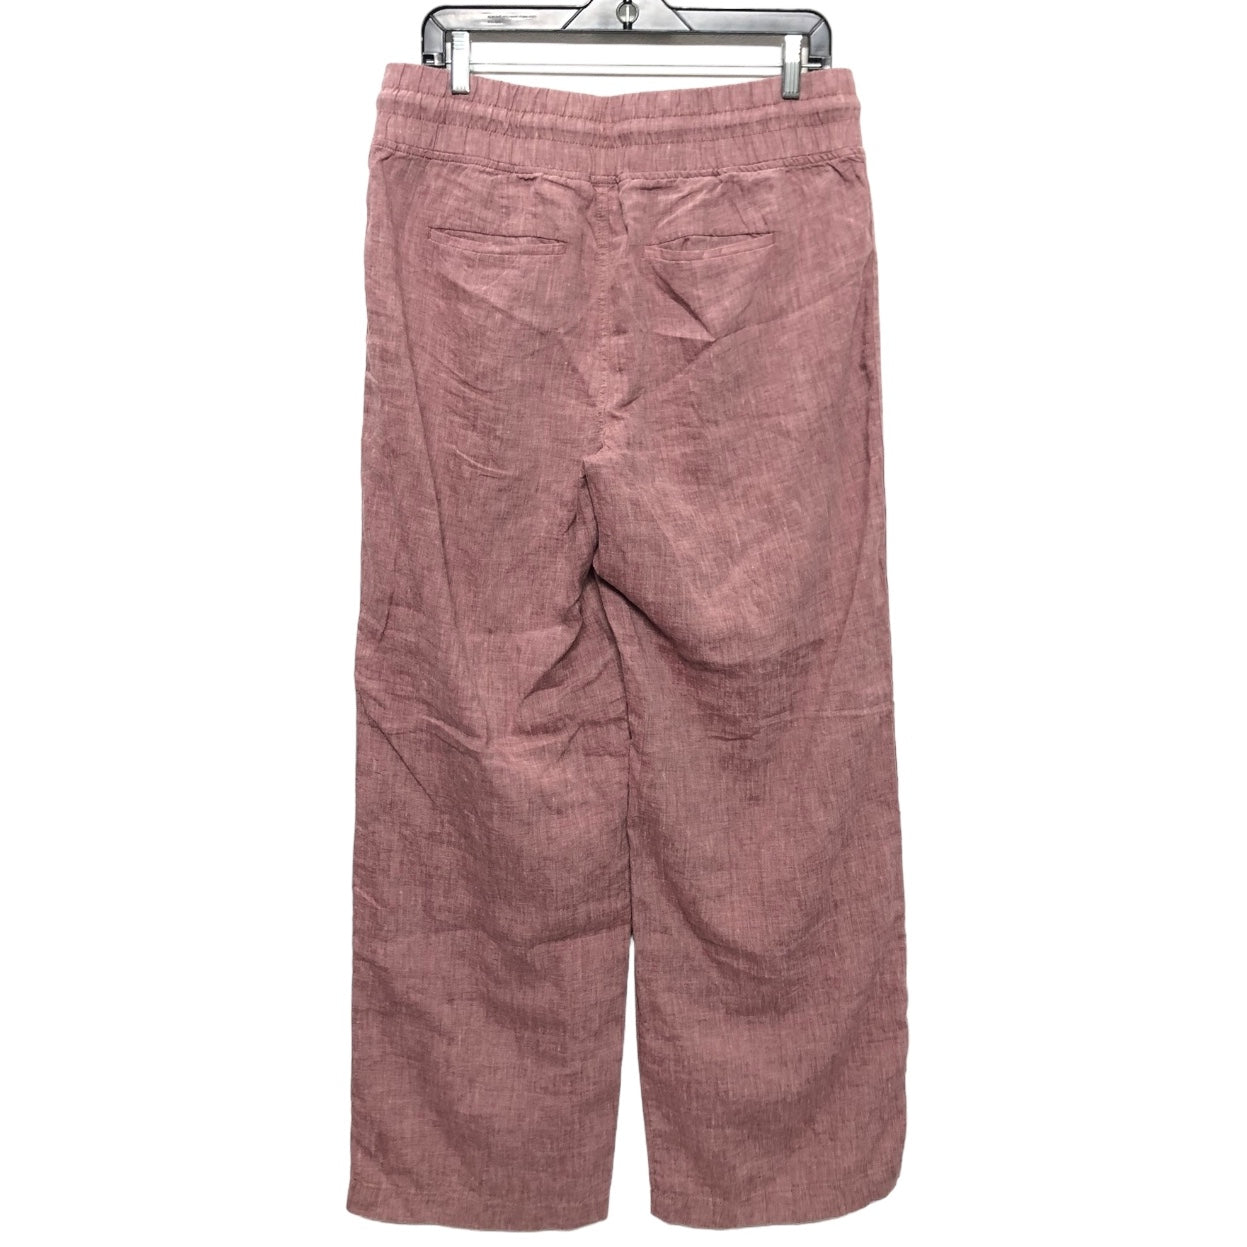 Brown & Pink Pants Linen Athleta, Size 14